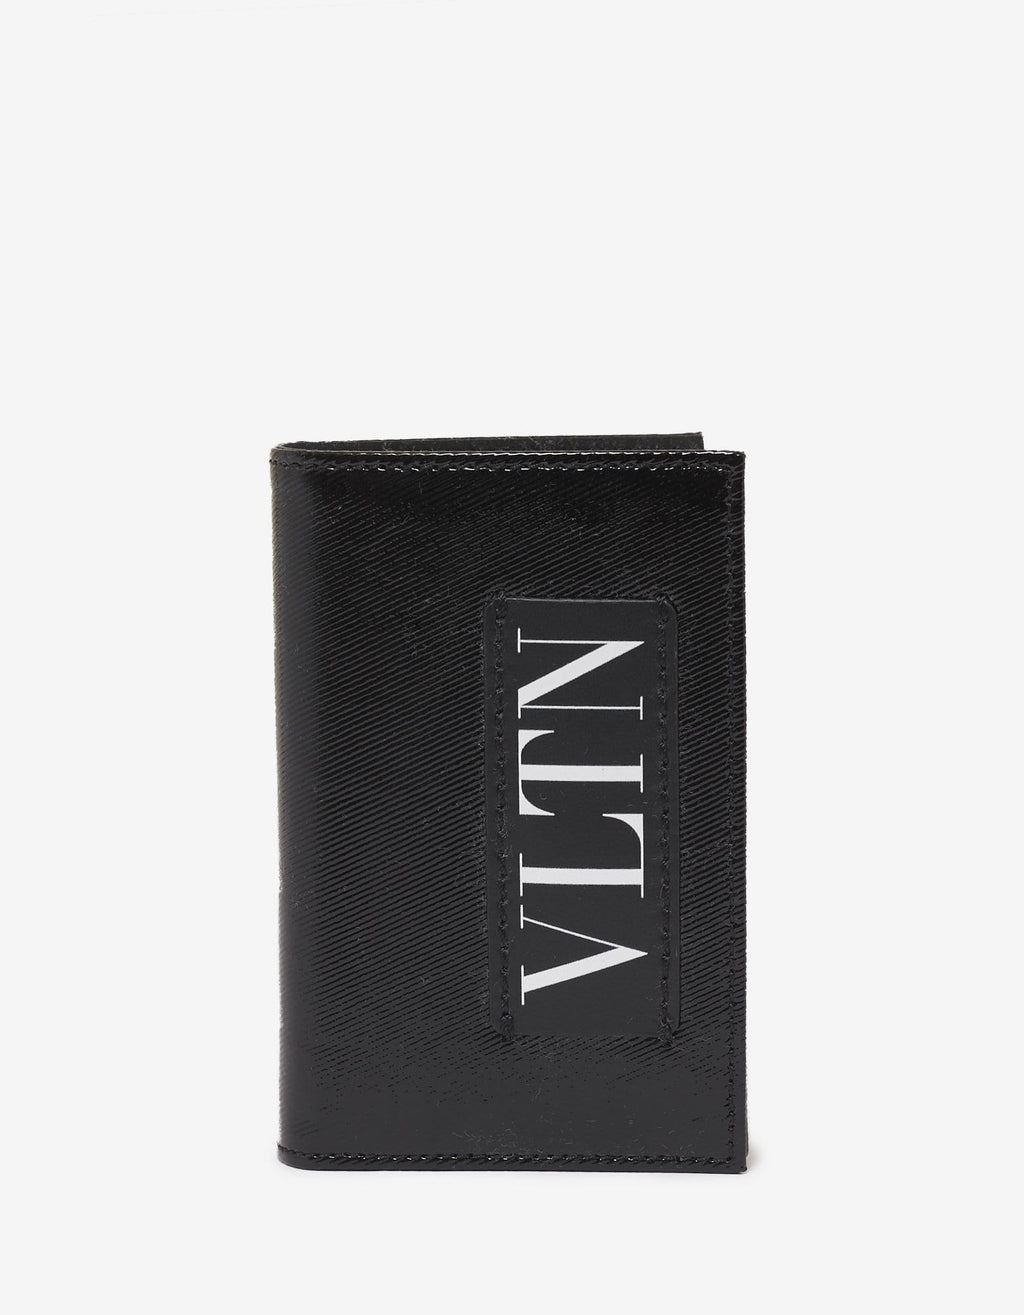 Valentino Garavani Valentino Garavani Black Patent Leather VLTN Card Wallet